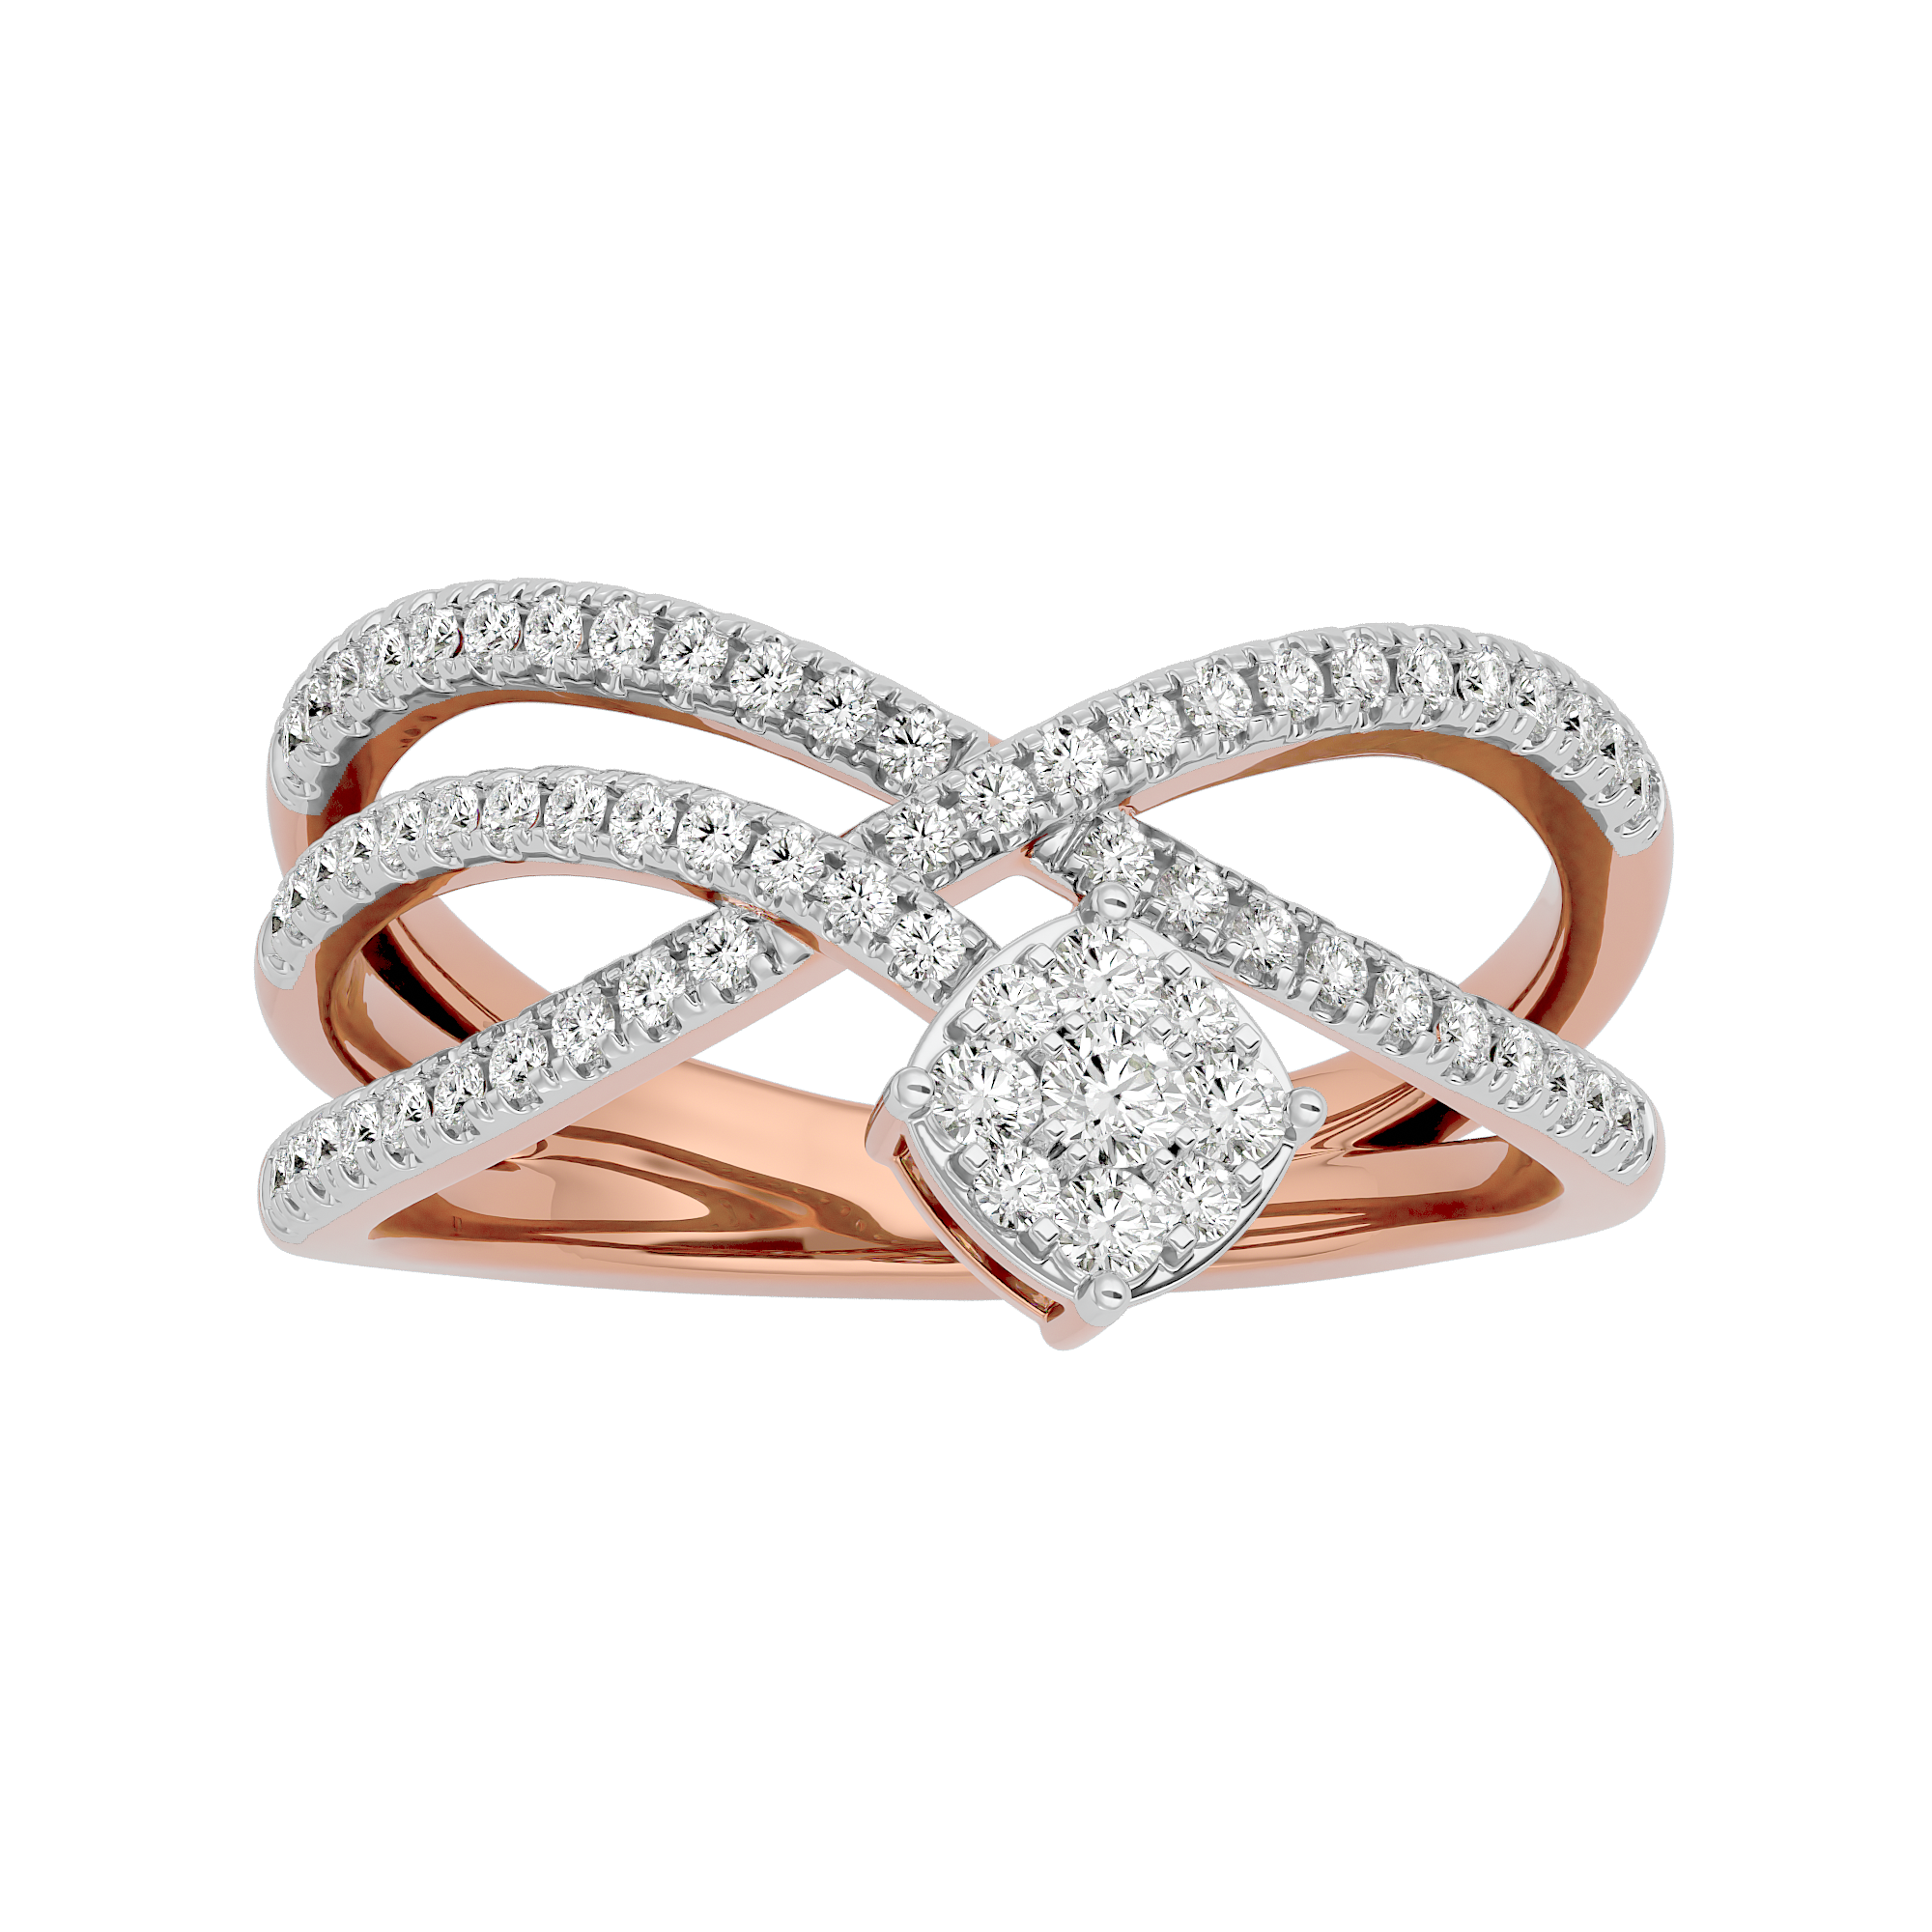 0.54 Carat Diamond Ring in Rose Gold - Blu Diamonds